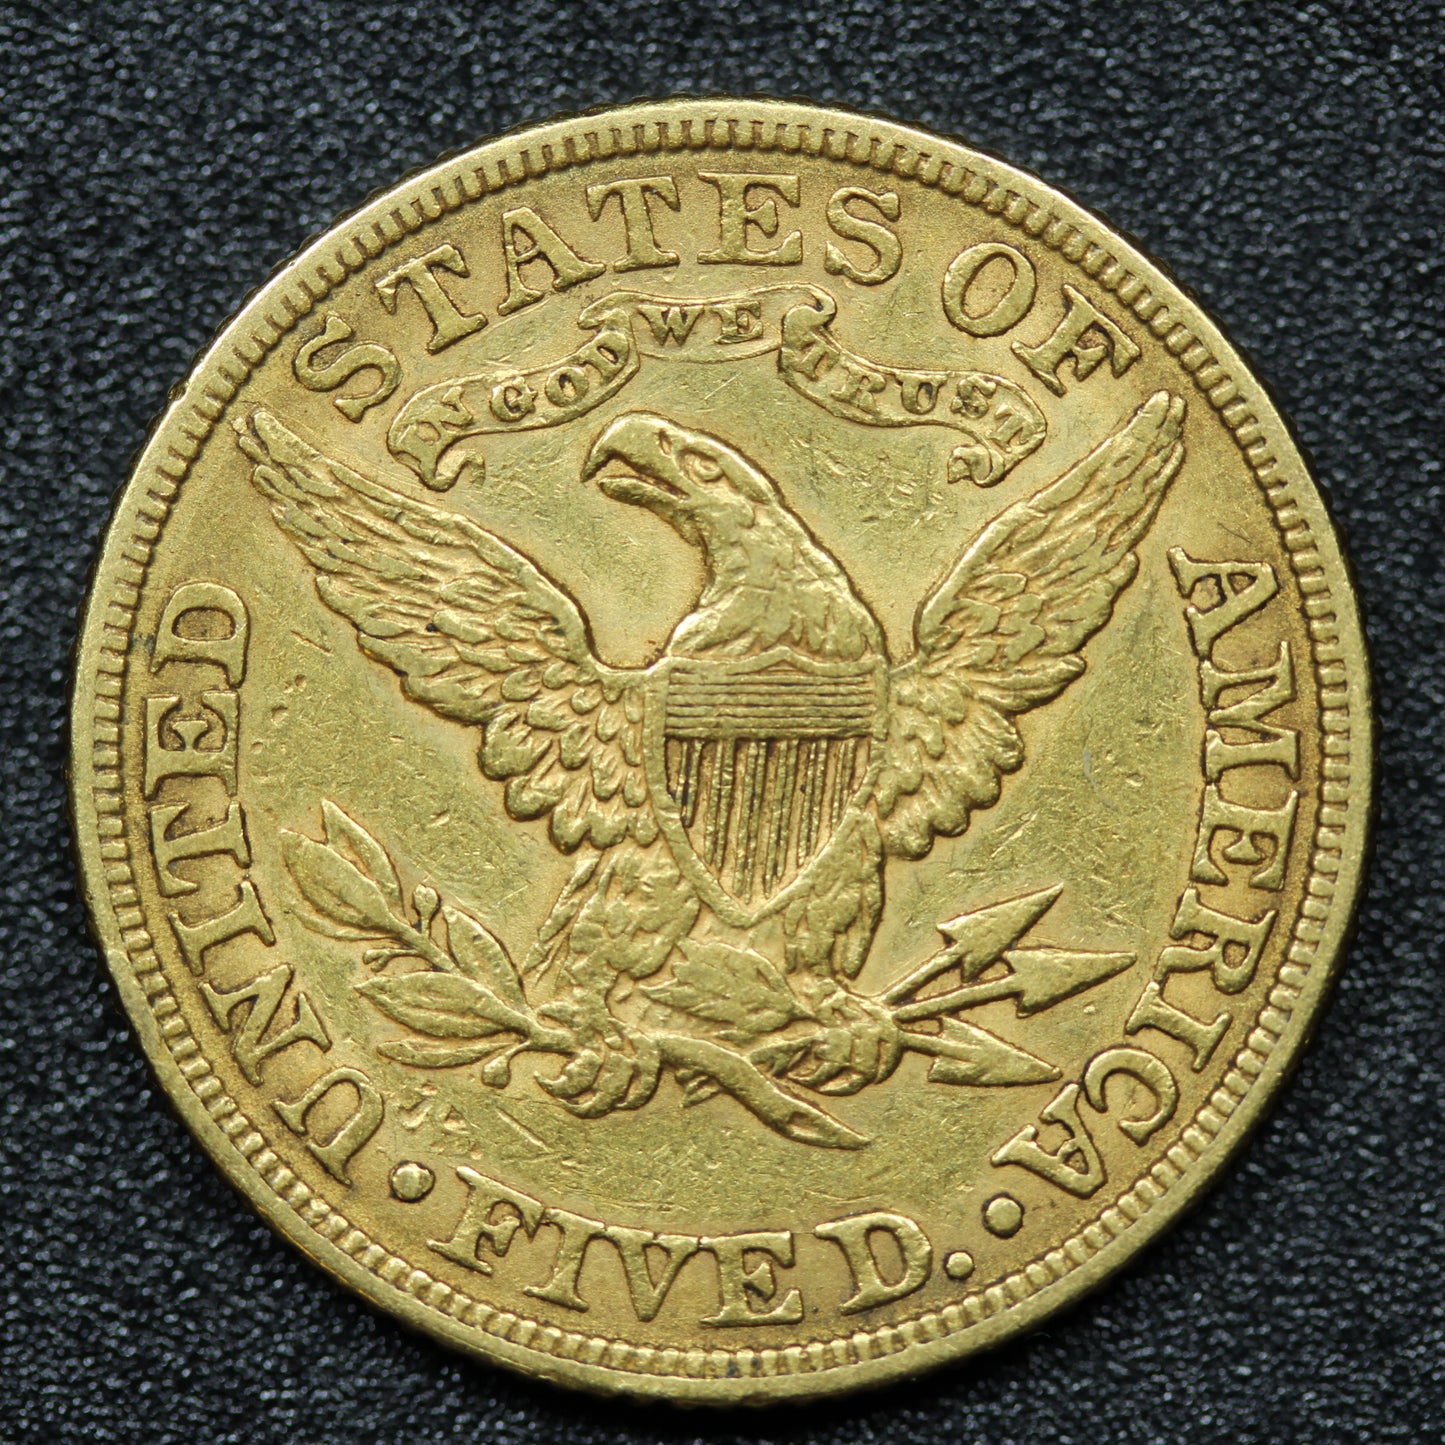 1882 $5 Gold Liberty Head Half Eagle Coin Philadelphia